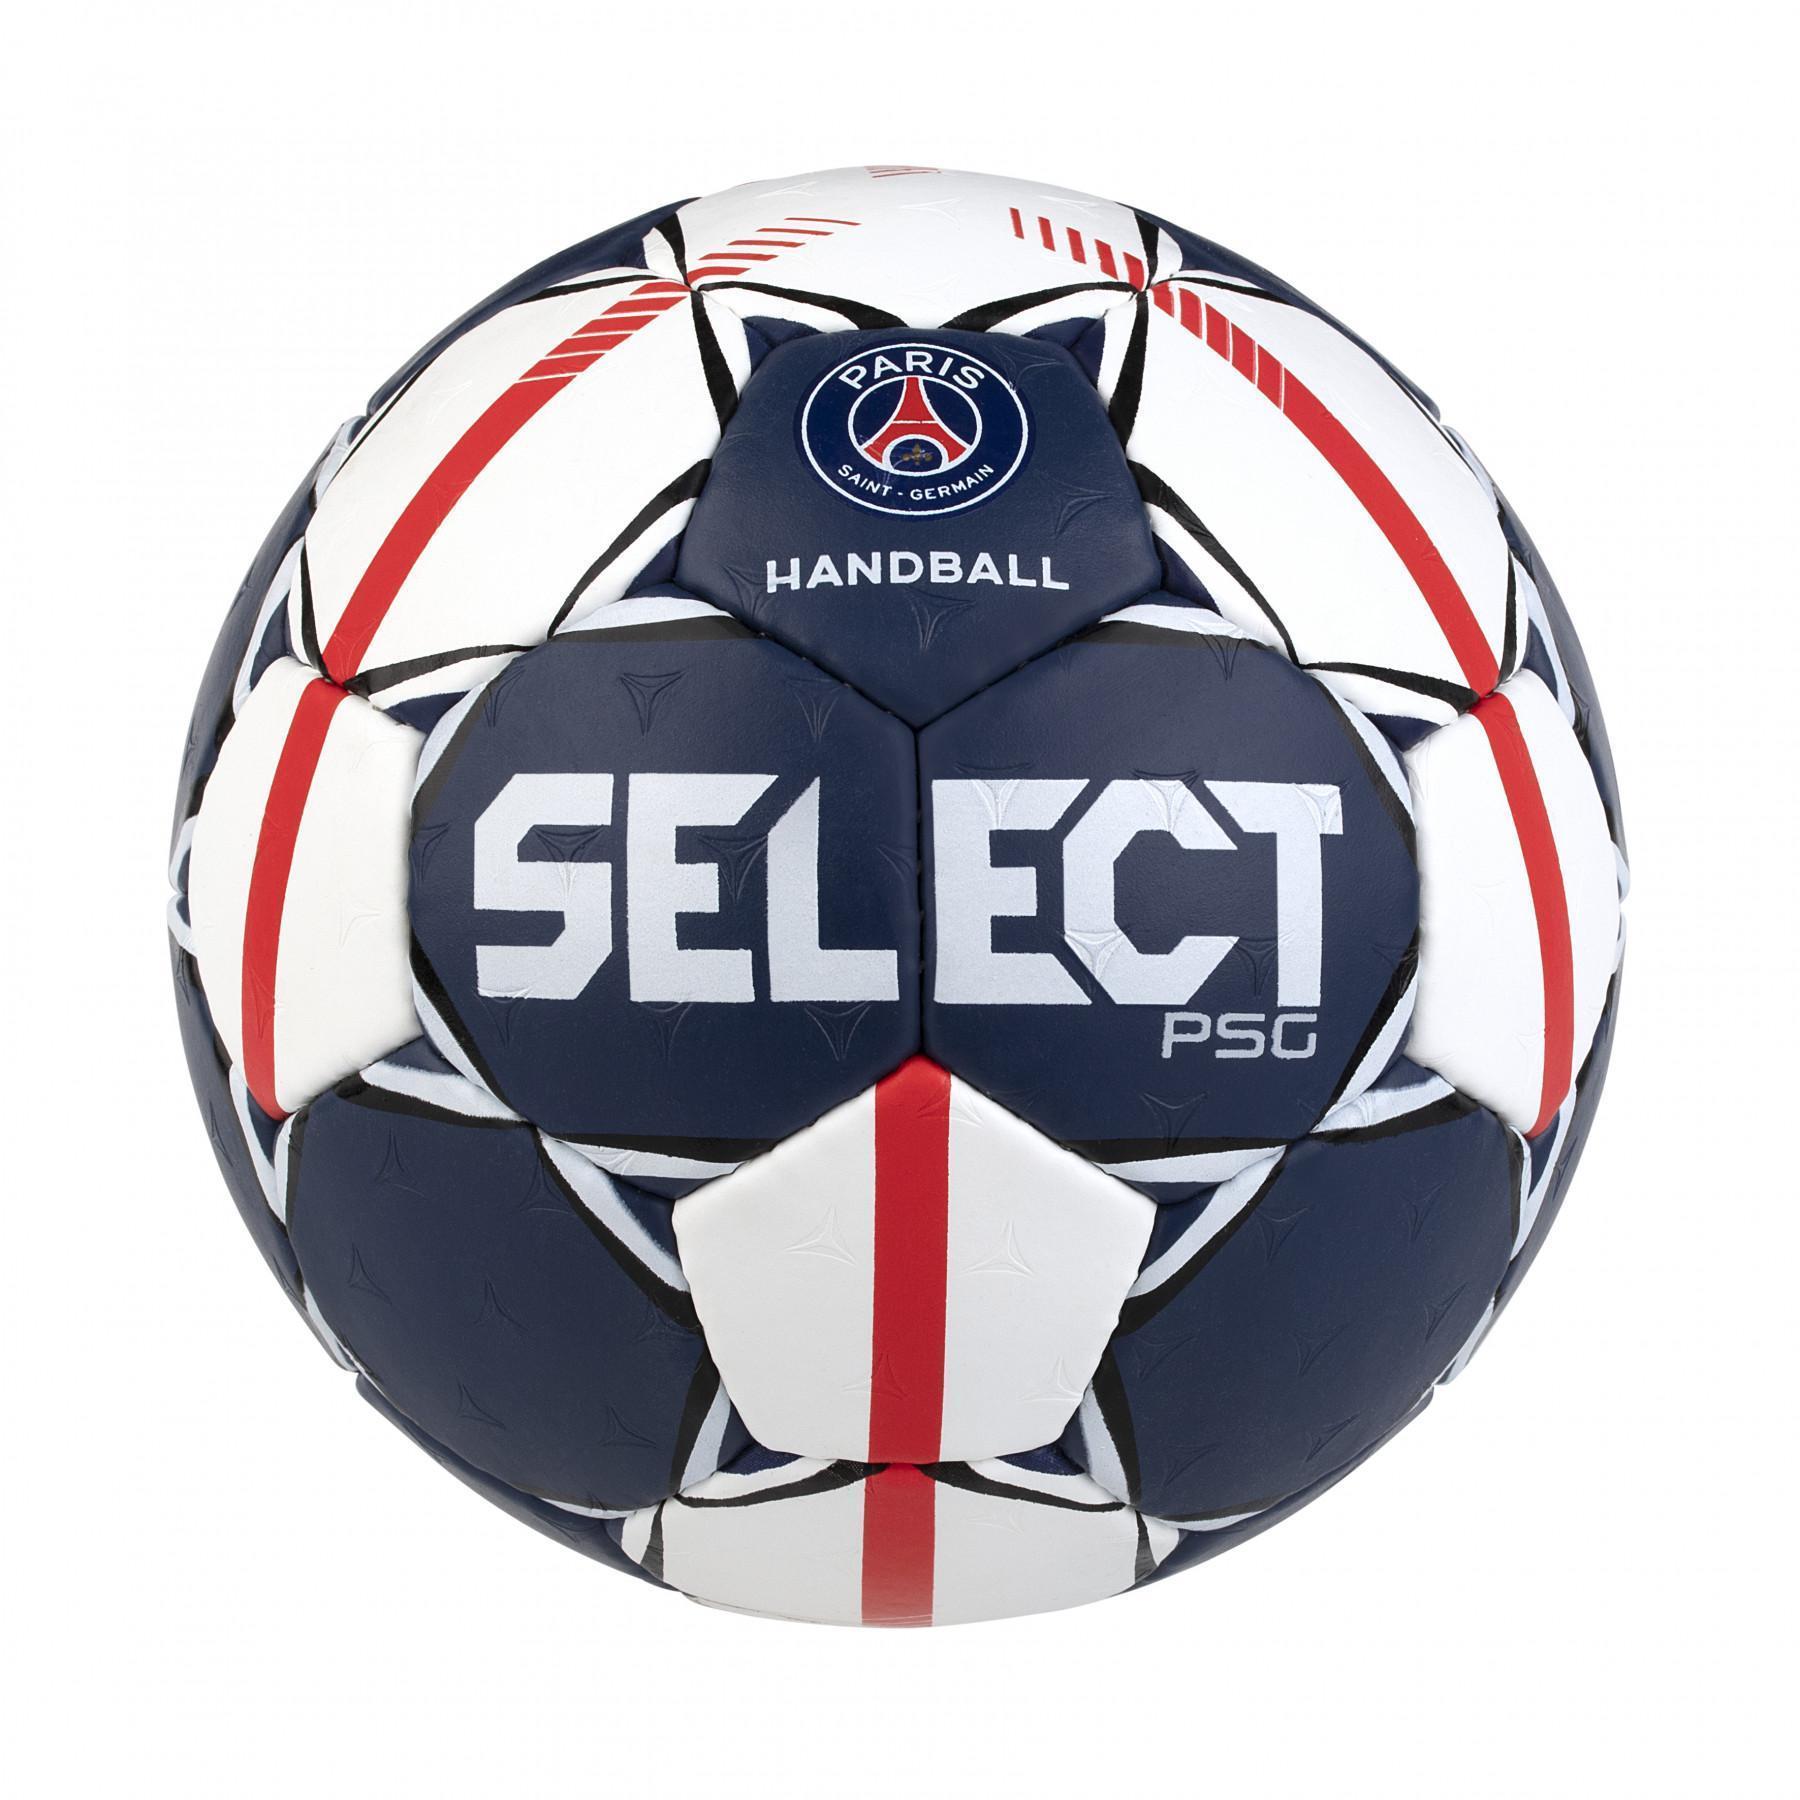 Handball Select PSG 2020/21  PSG Handball  Clubs  Fan